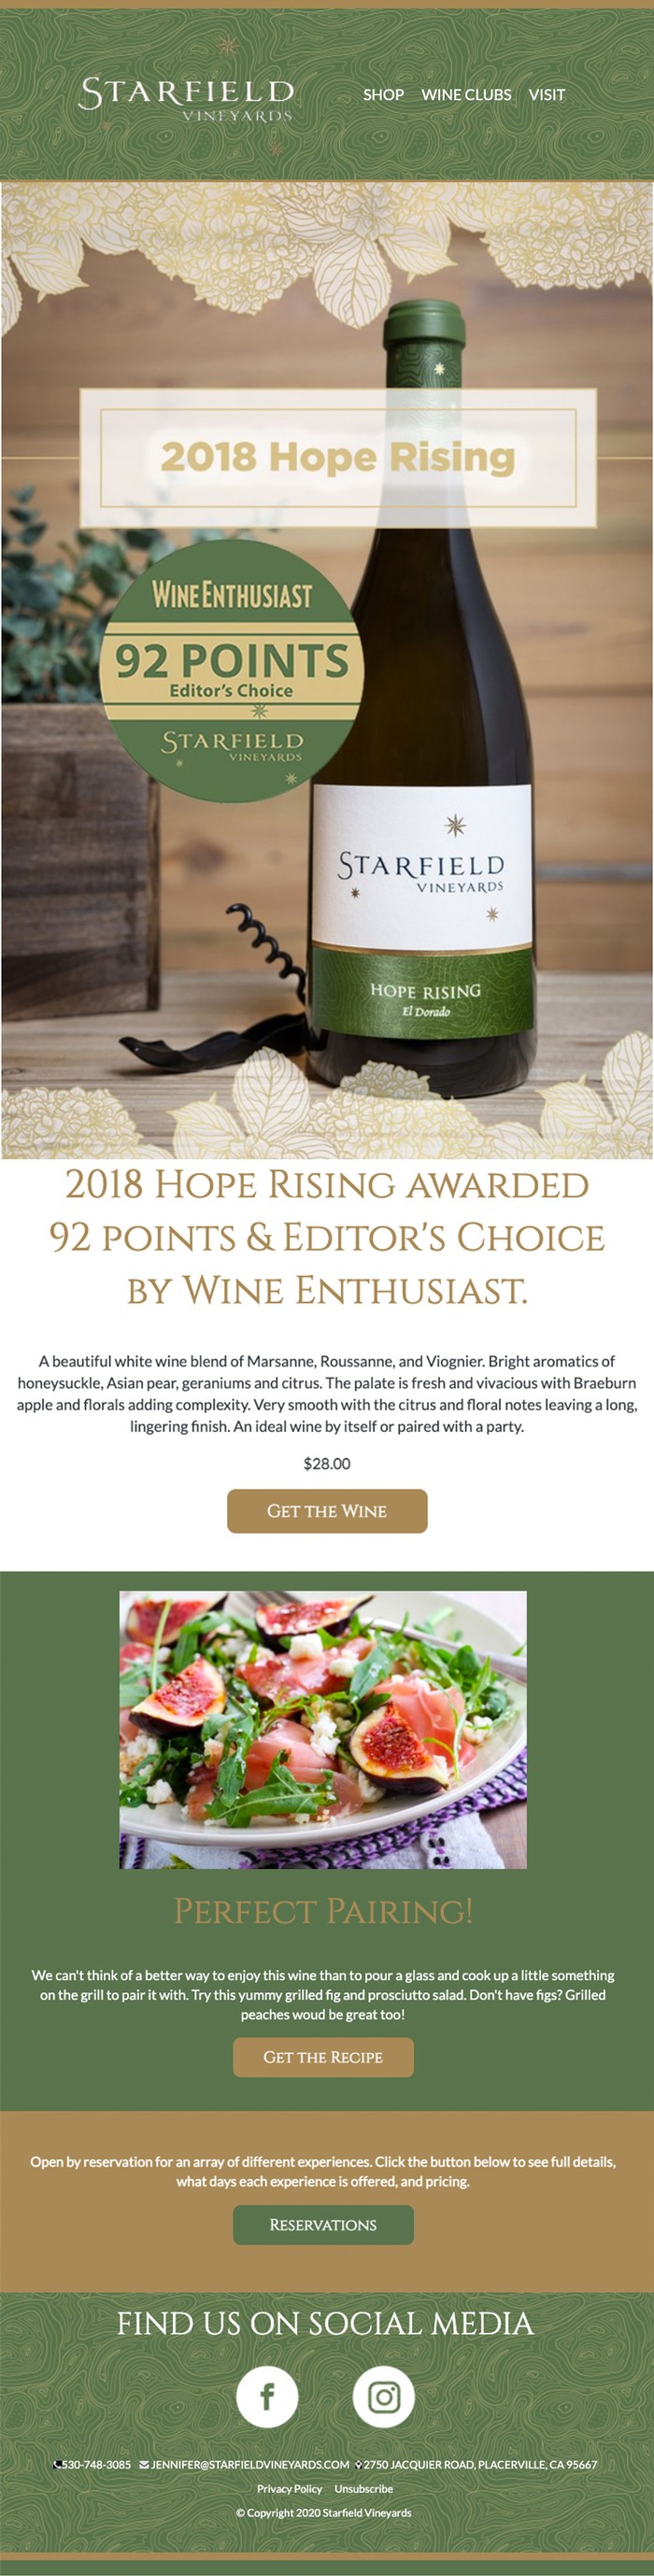 Vega Digital Awards Winner - Starfield Vineyards Email Campaign, WineGlass Marketing